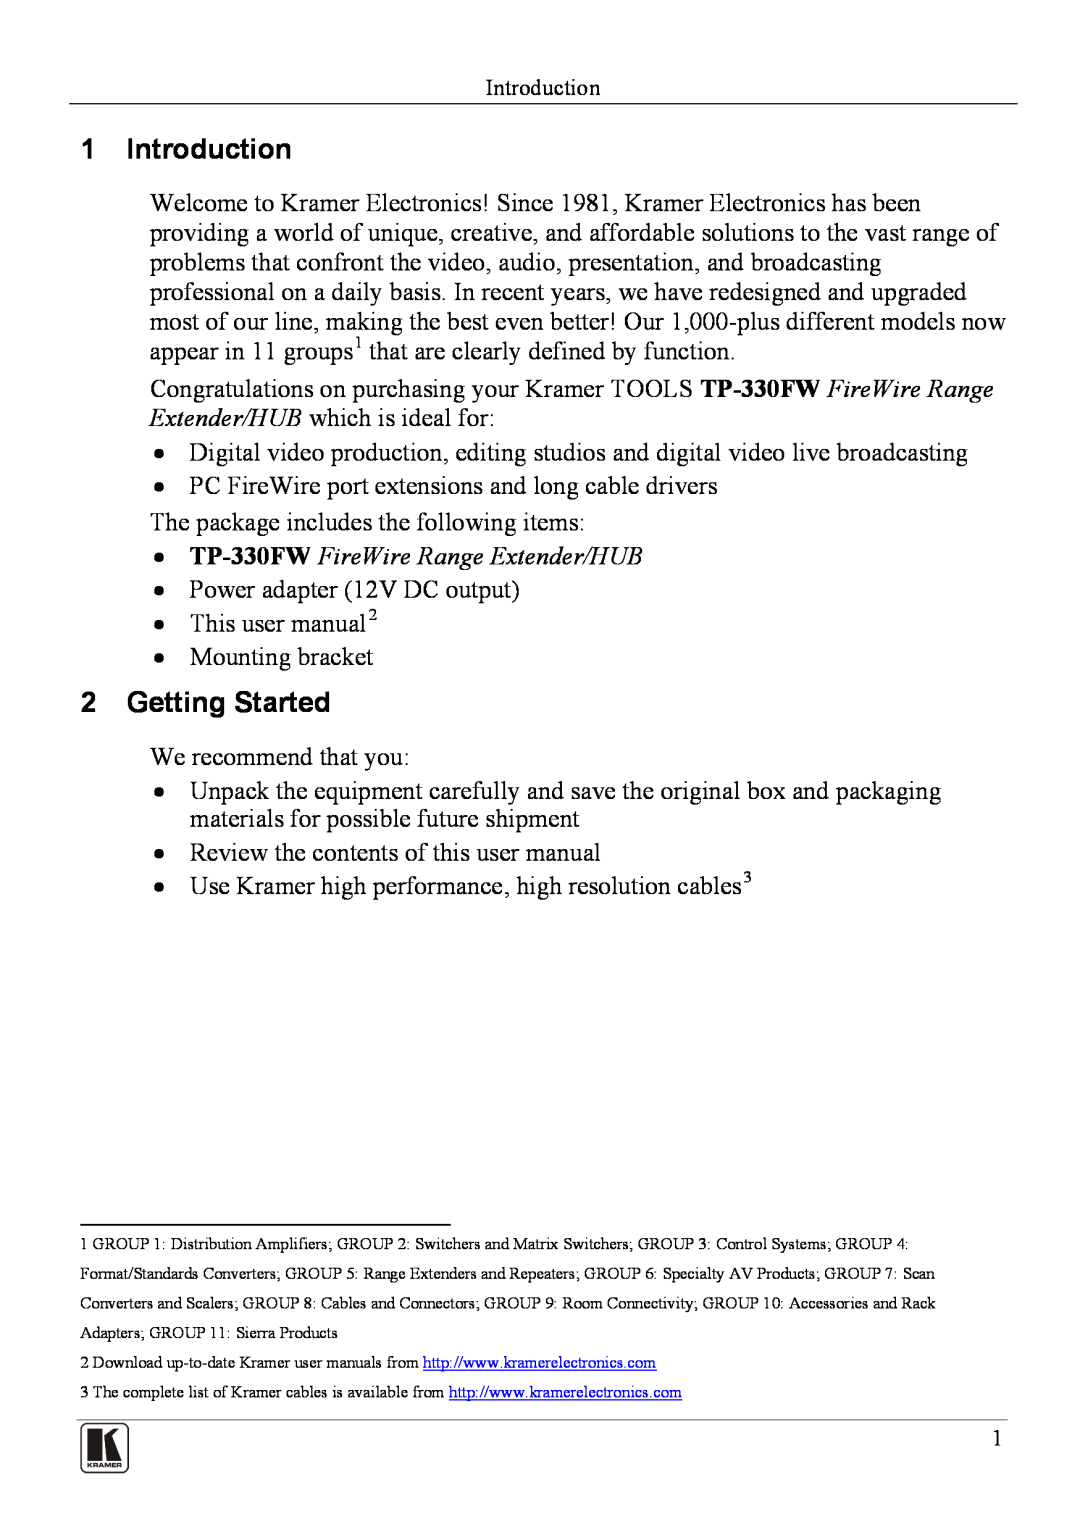 Kramer Electronics user manual Introduction, Getting Started, TP-330FW FireWire Range Extender/HUB 